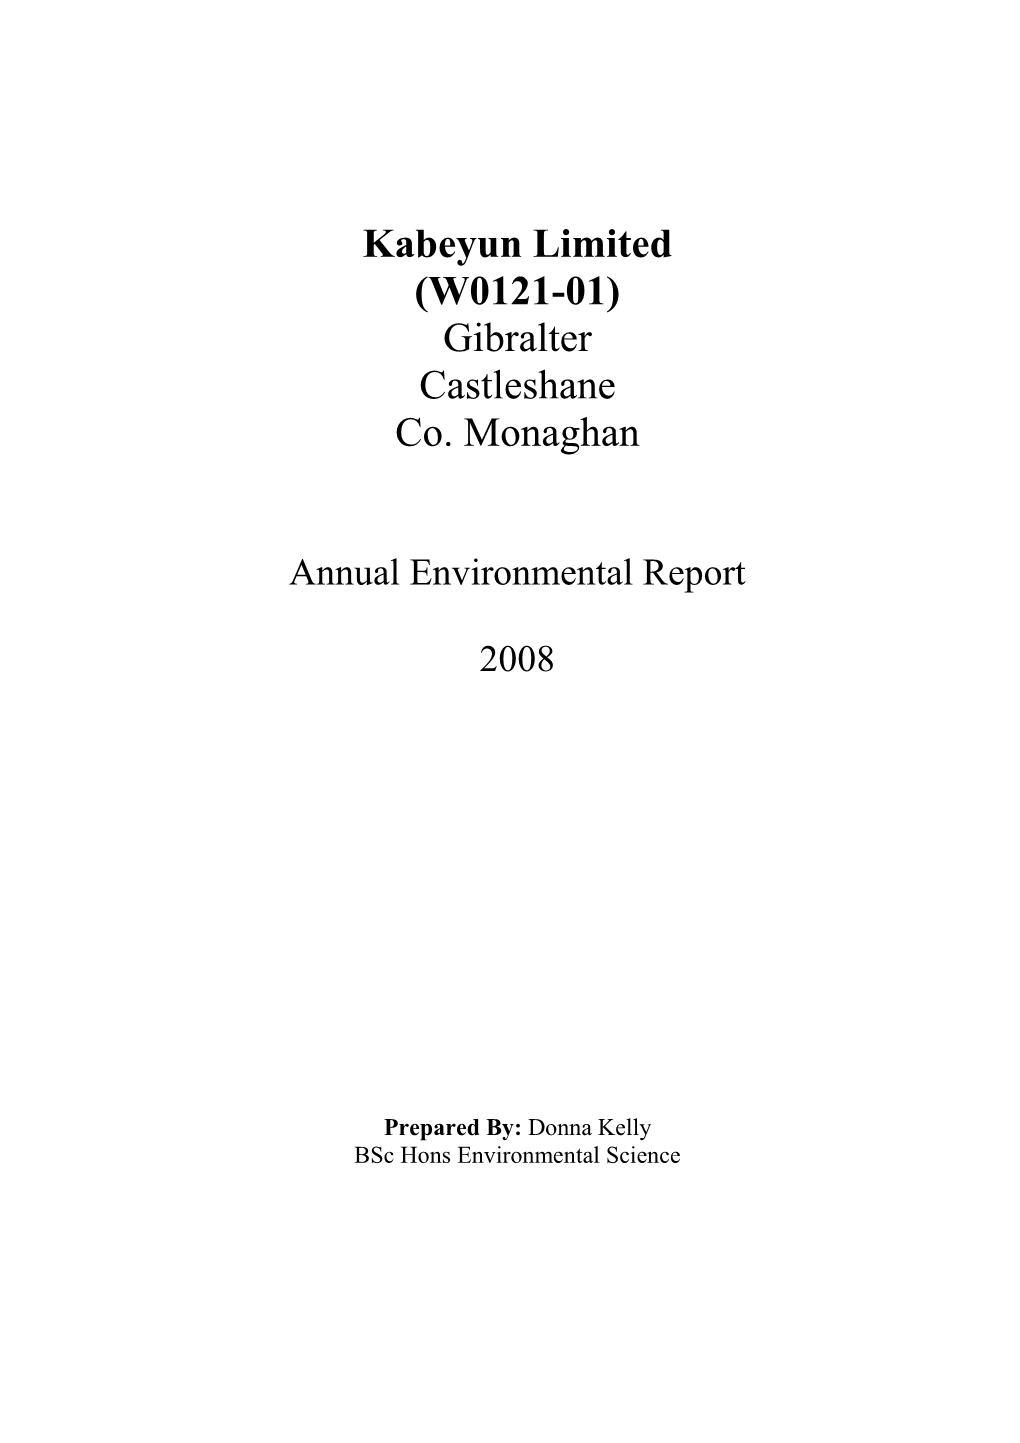 Kabeyun Limited (W0121-01) Gibralter Castleshane Co. Monaghan